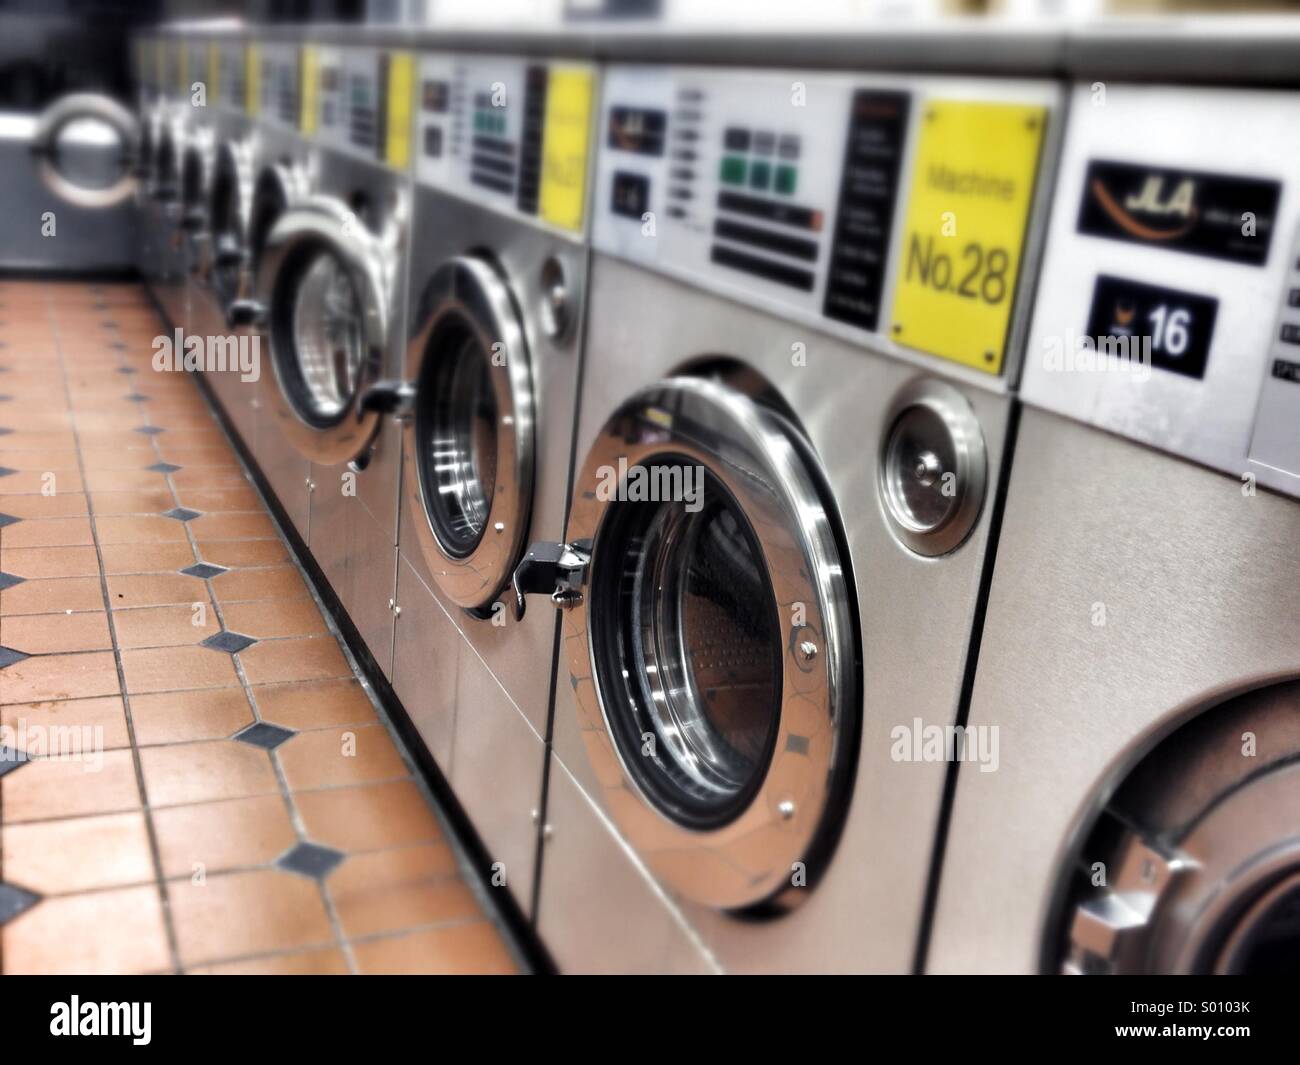 Trampolieri macchine in lavanderia a gettoni, Londra Foto Stock